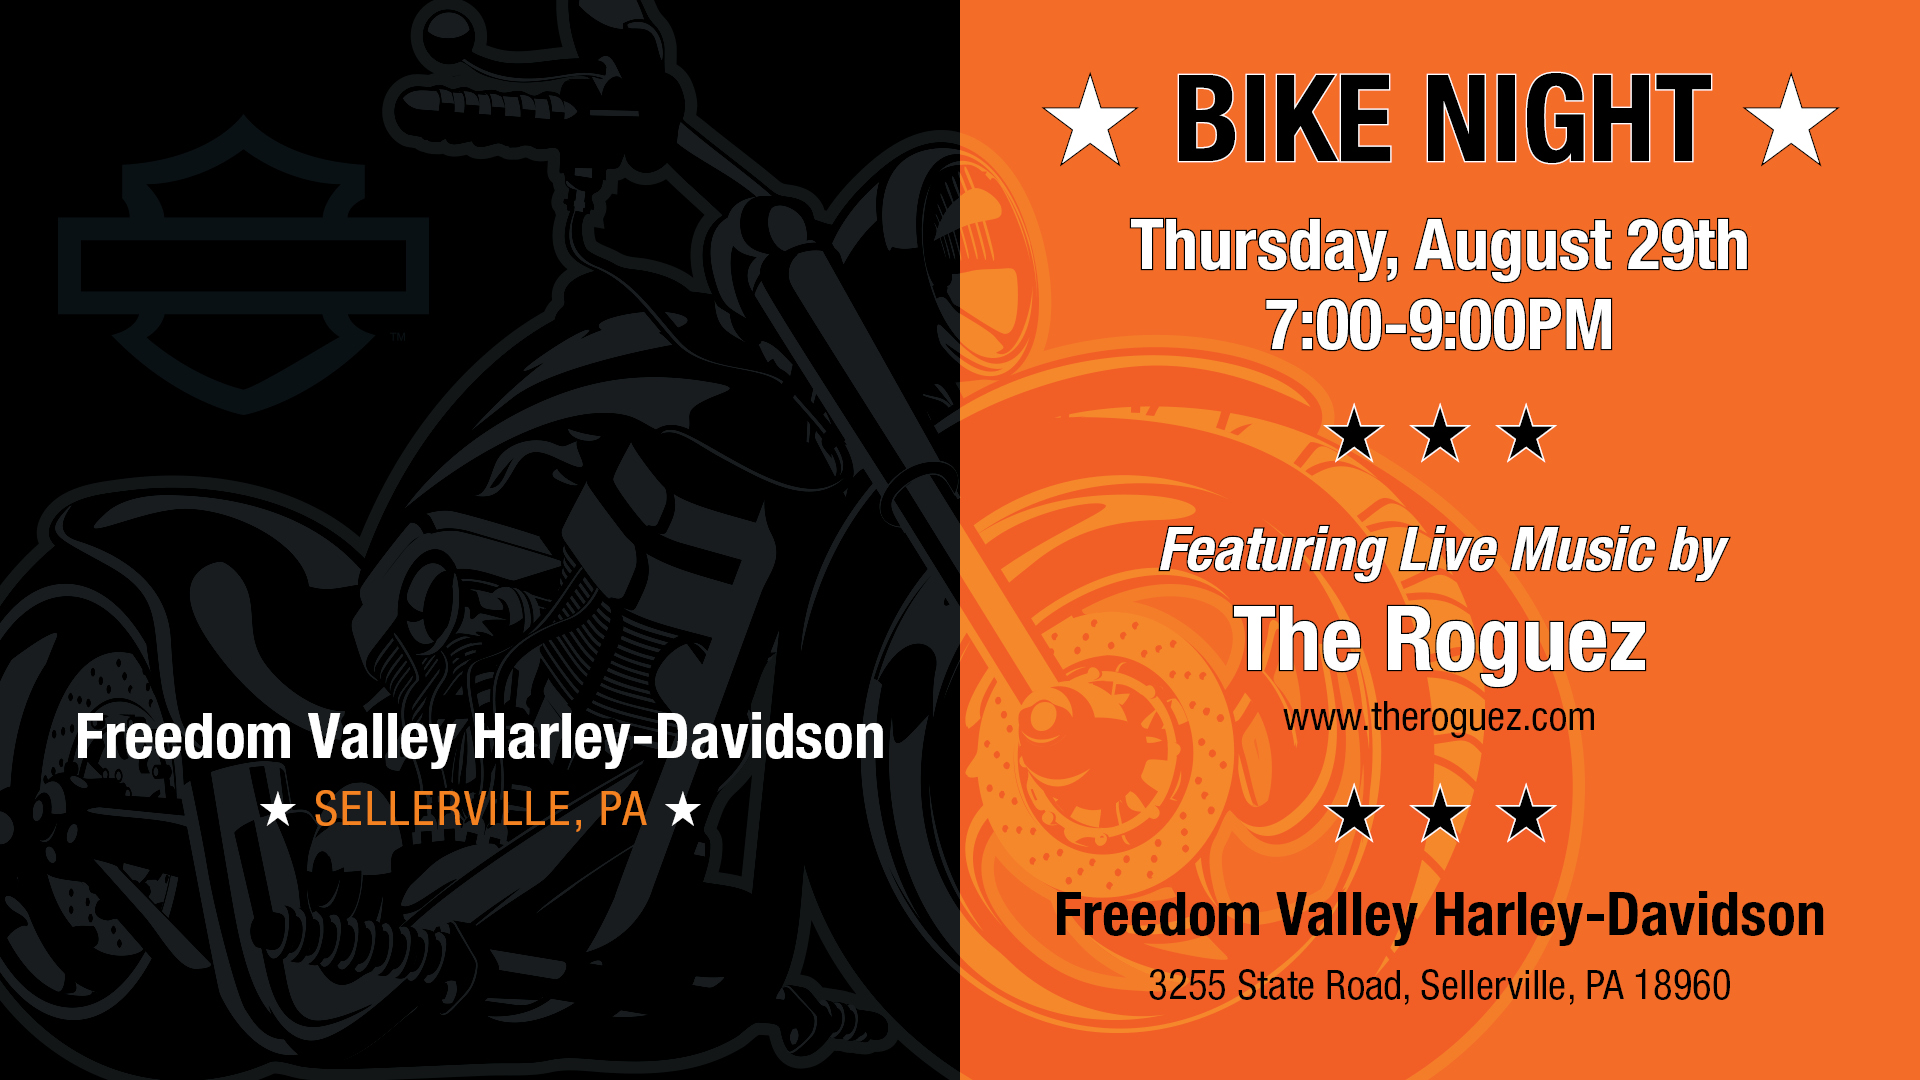 Freedom Valley Harley-Davidson Bike Night - Aug. 29th